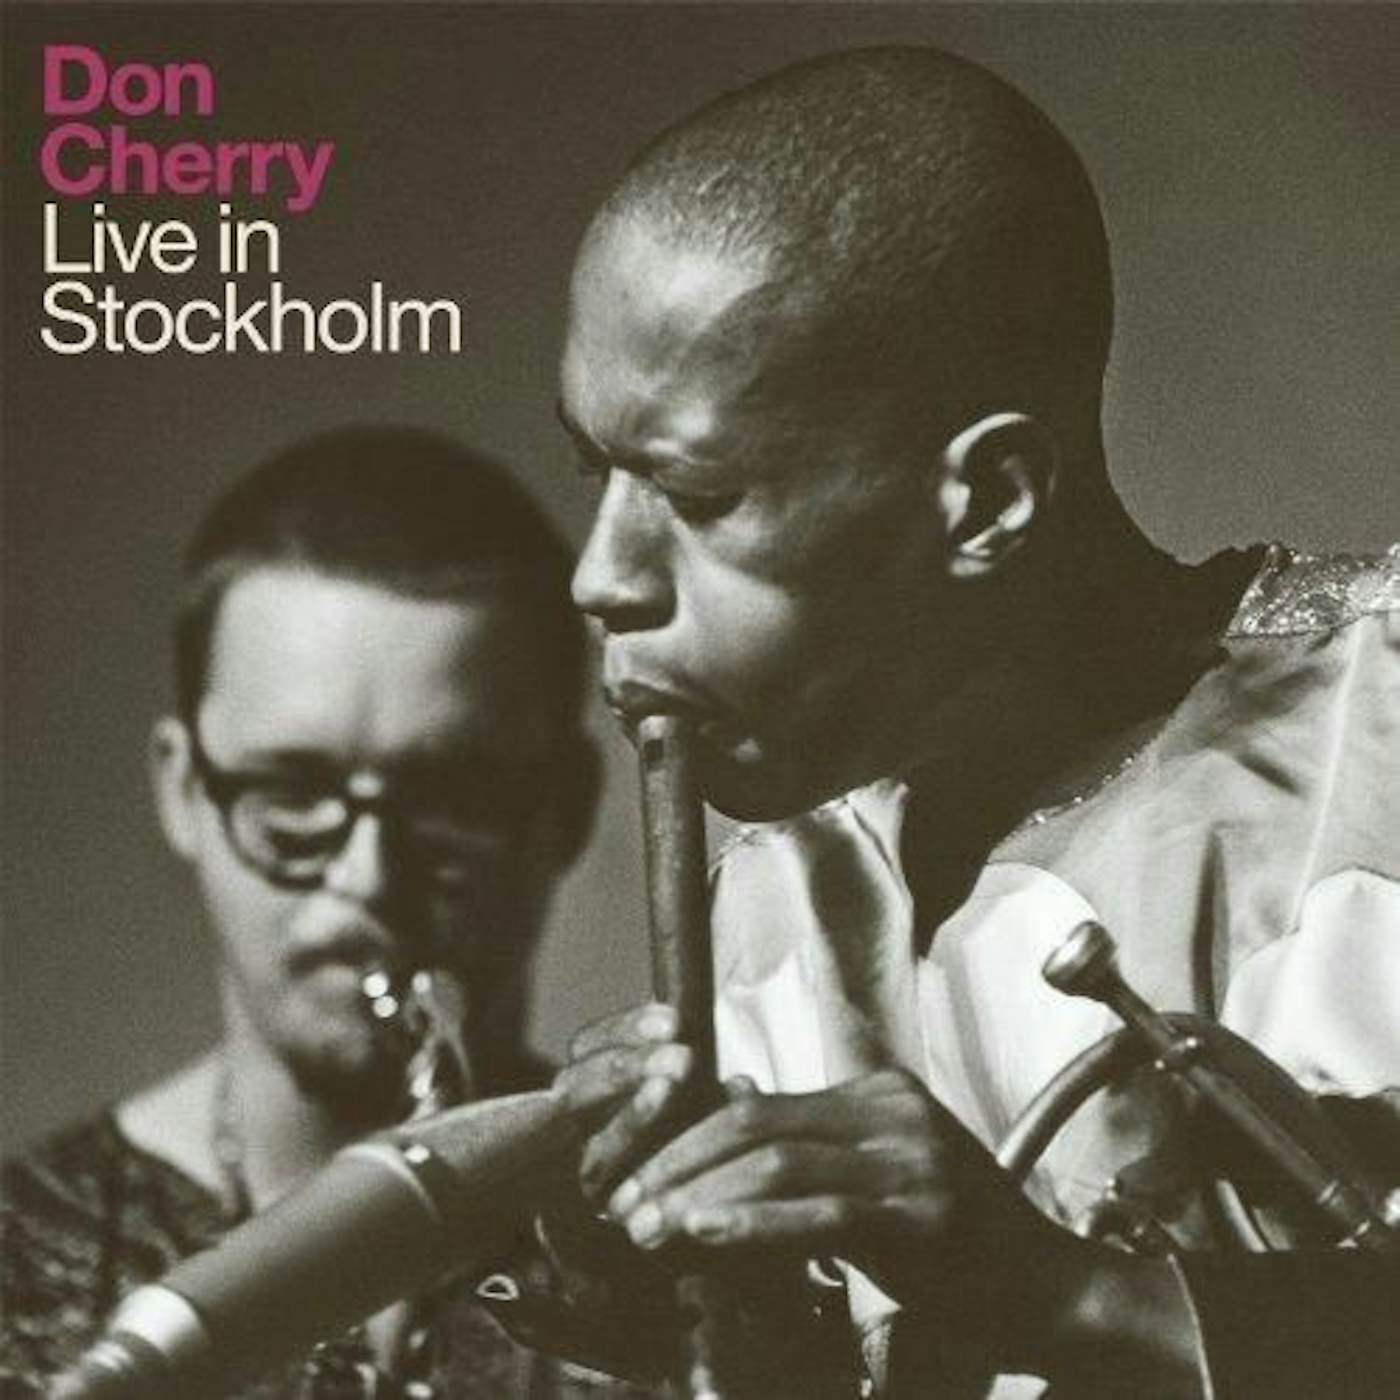 DON CHERRY LIVE IN STOCKHOLM Vinyl Record